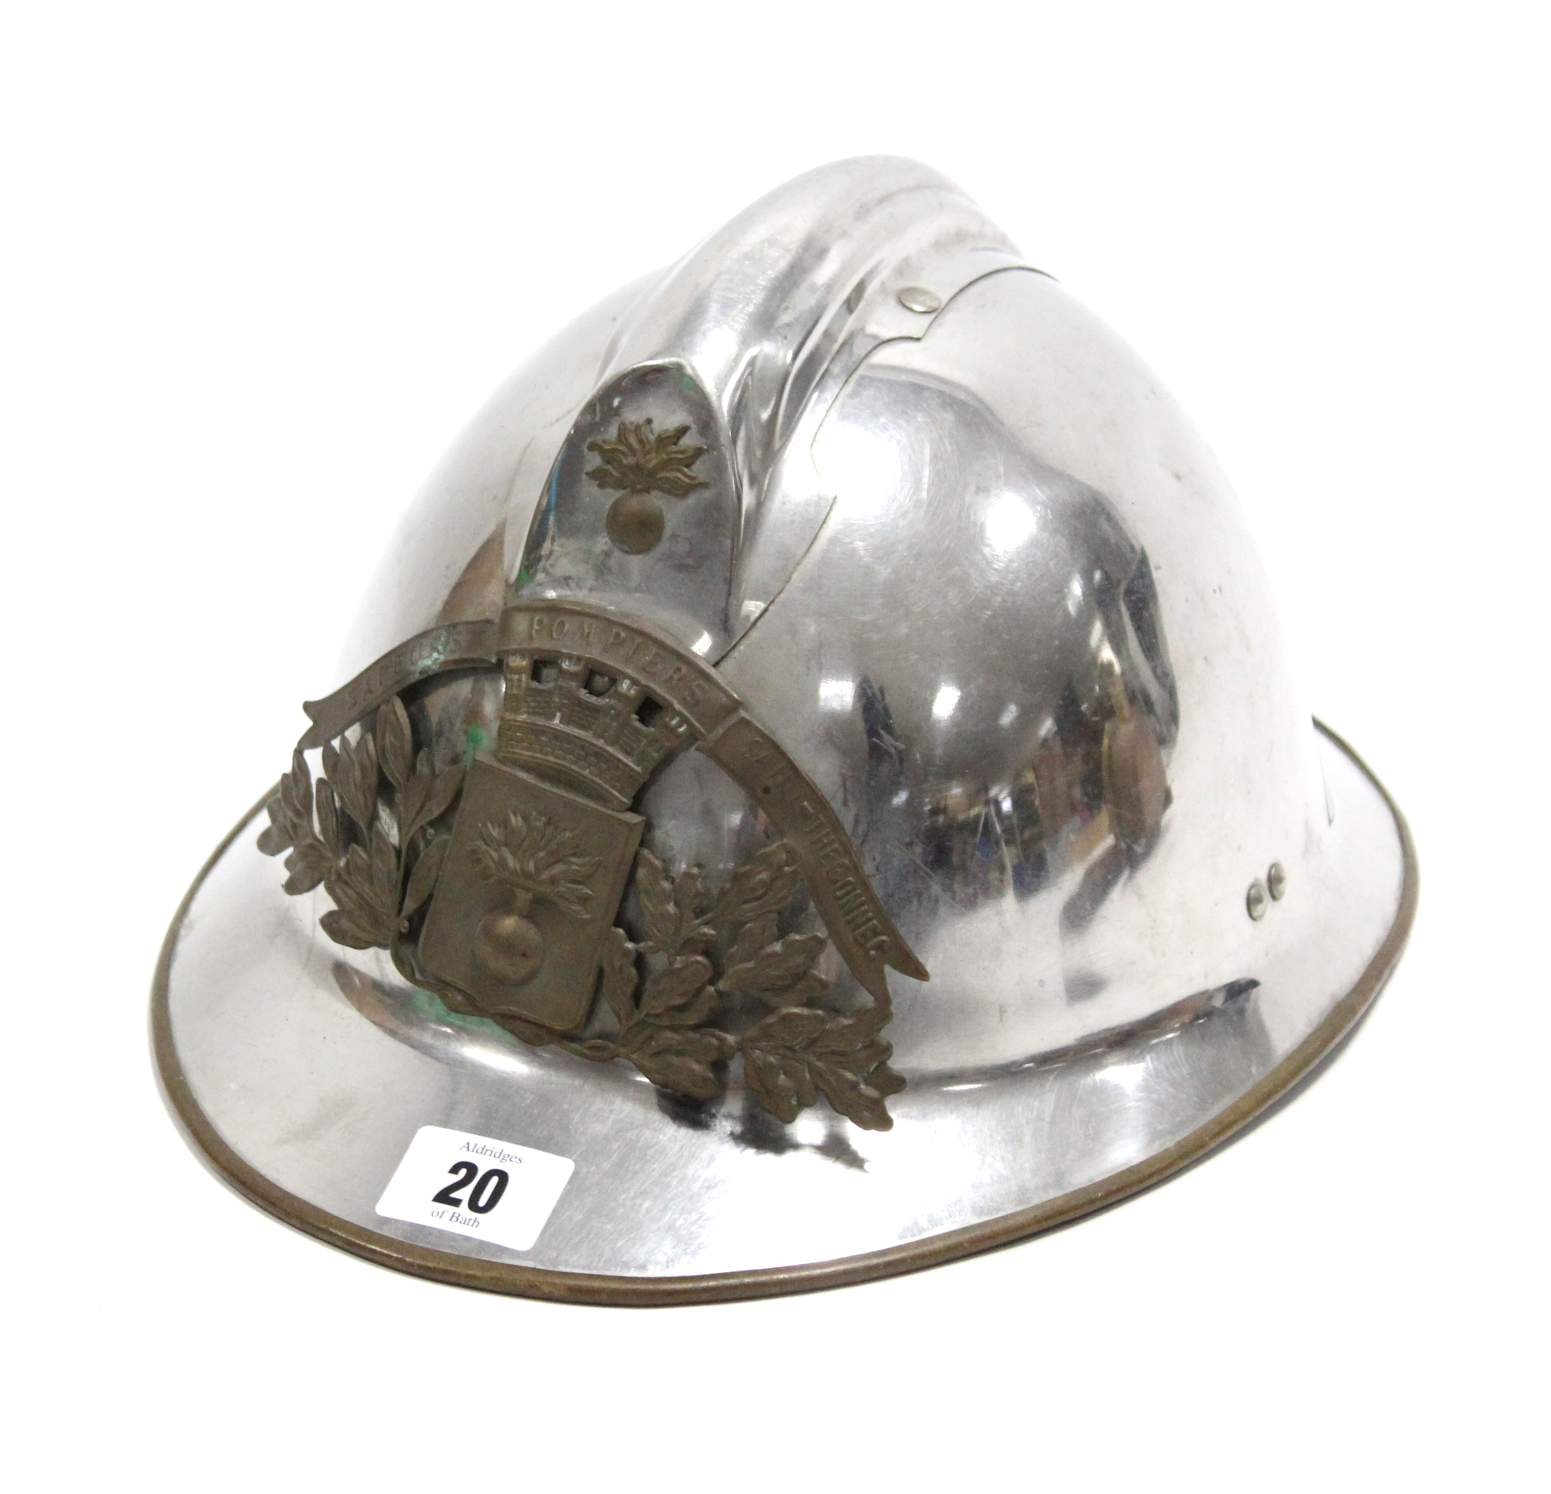 A steel fireman’s helmet.